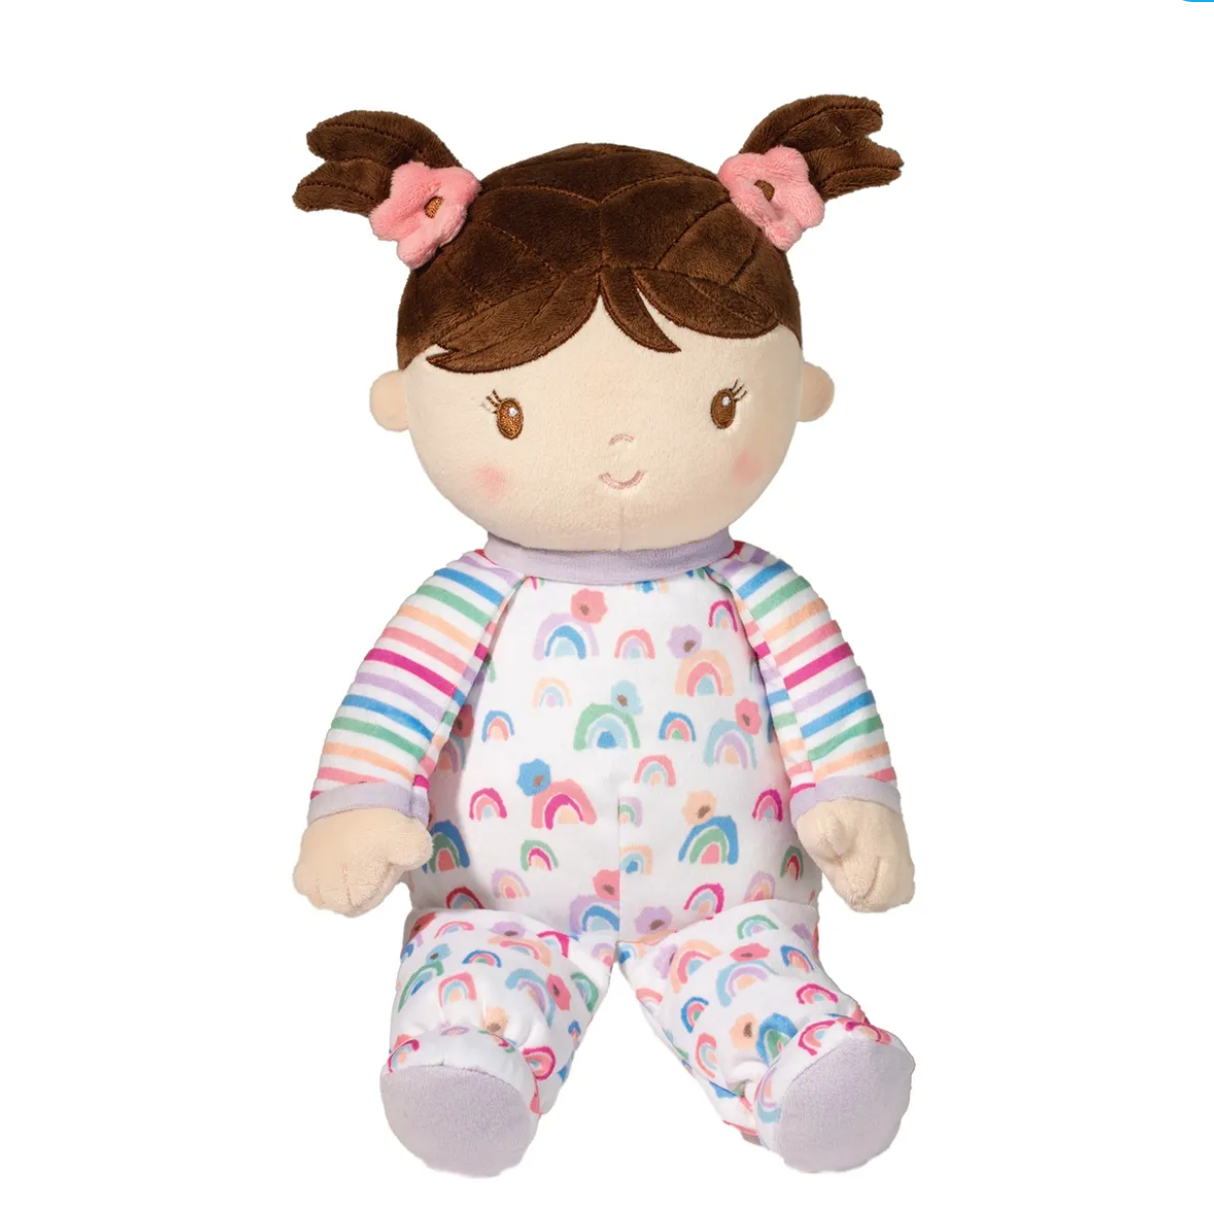 Isabelle Rainbow Stripe Soft Doll